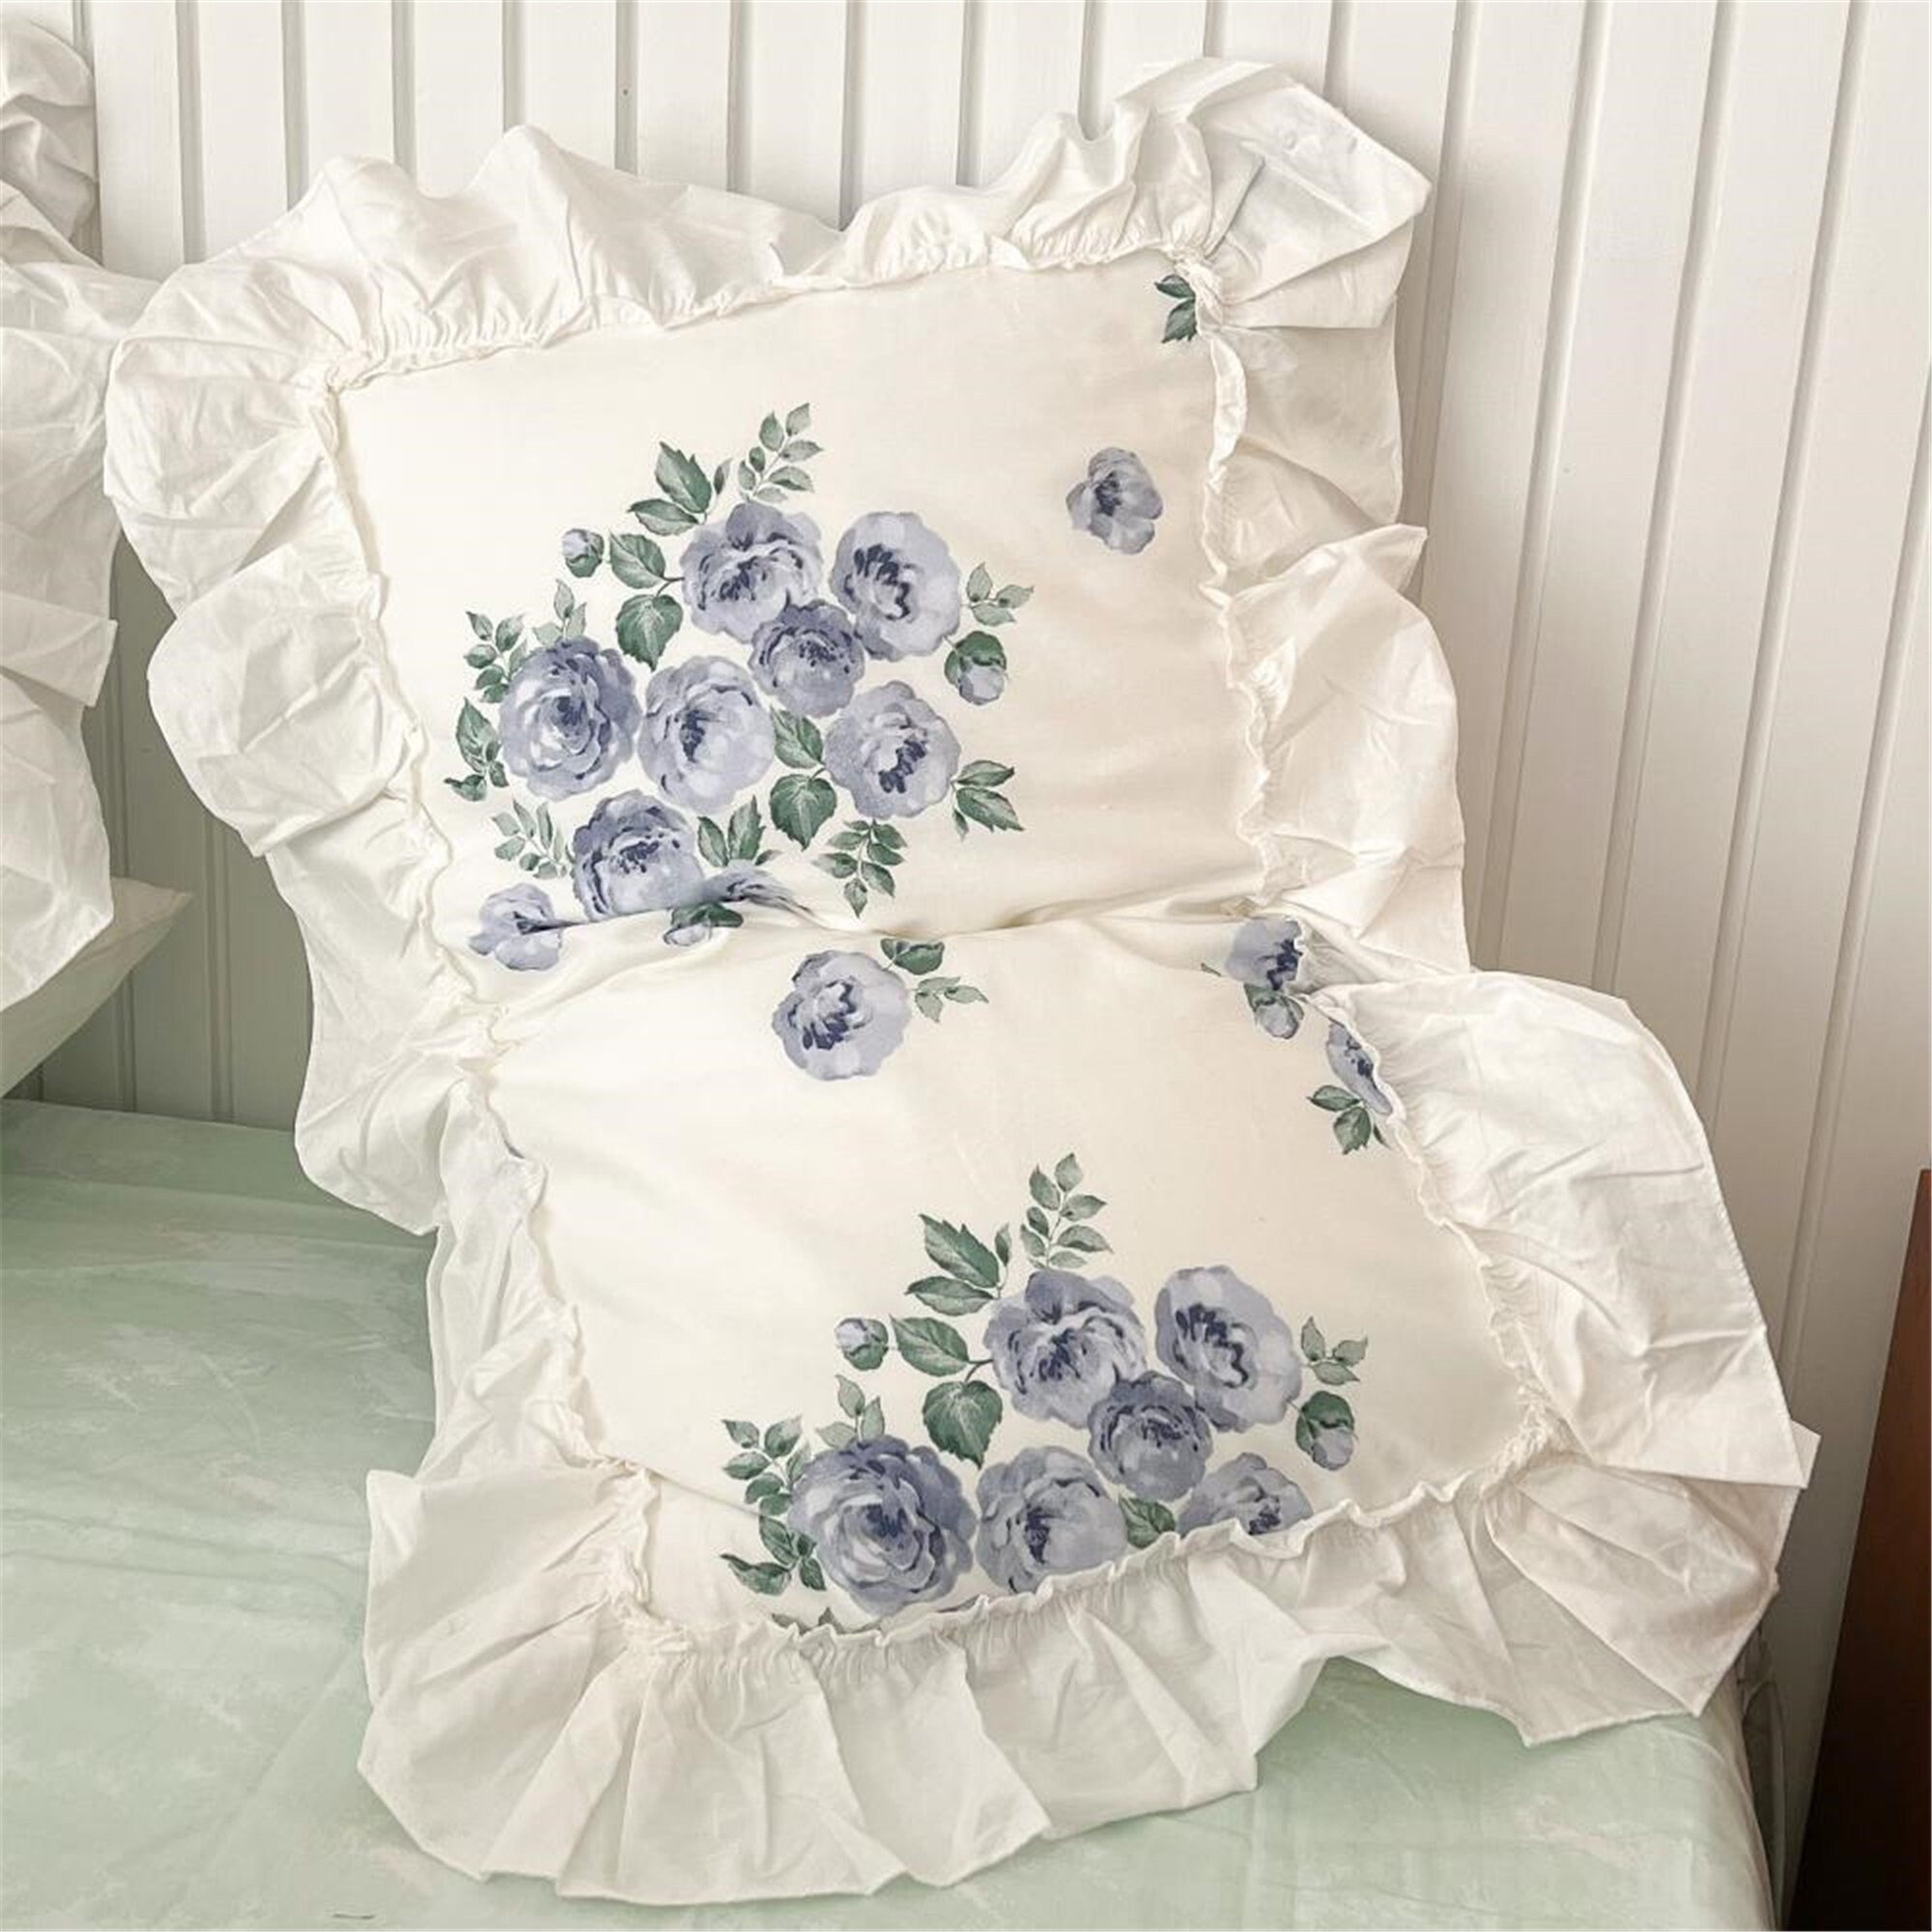 Blue Rose White 100% Cotton Duvet Cover Set, Aesthetic Floral